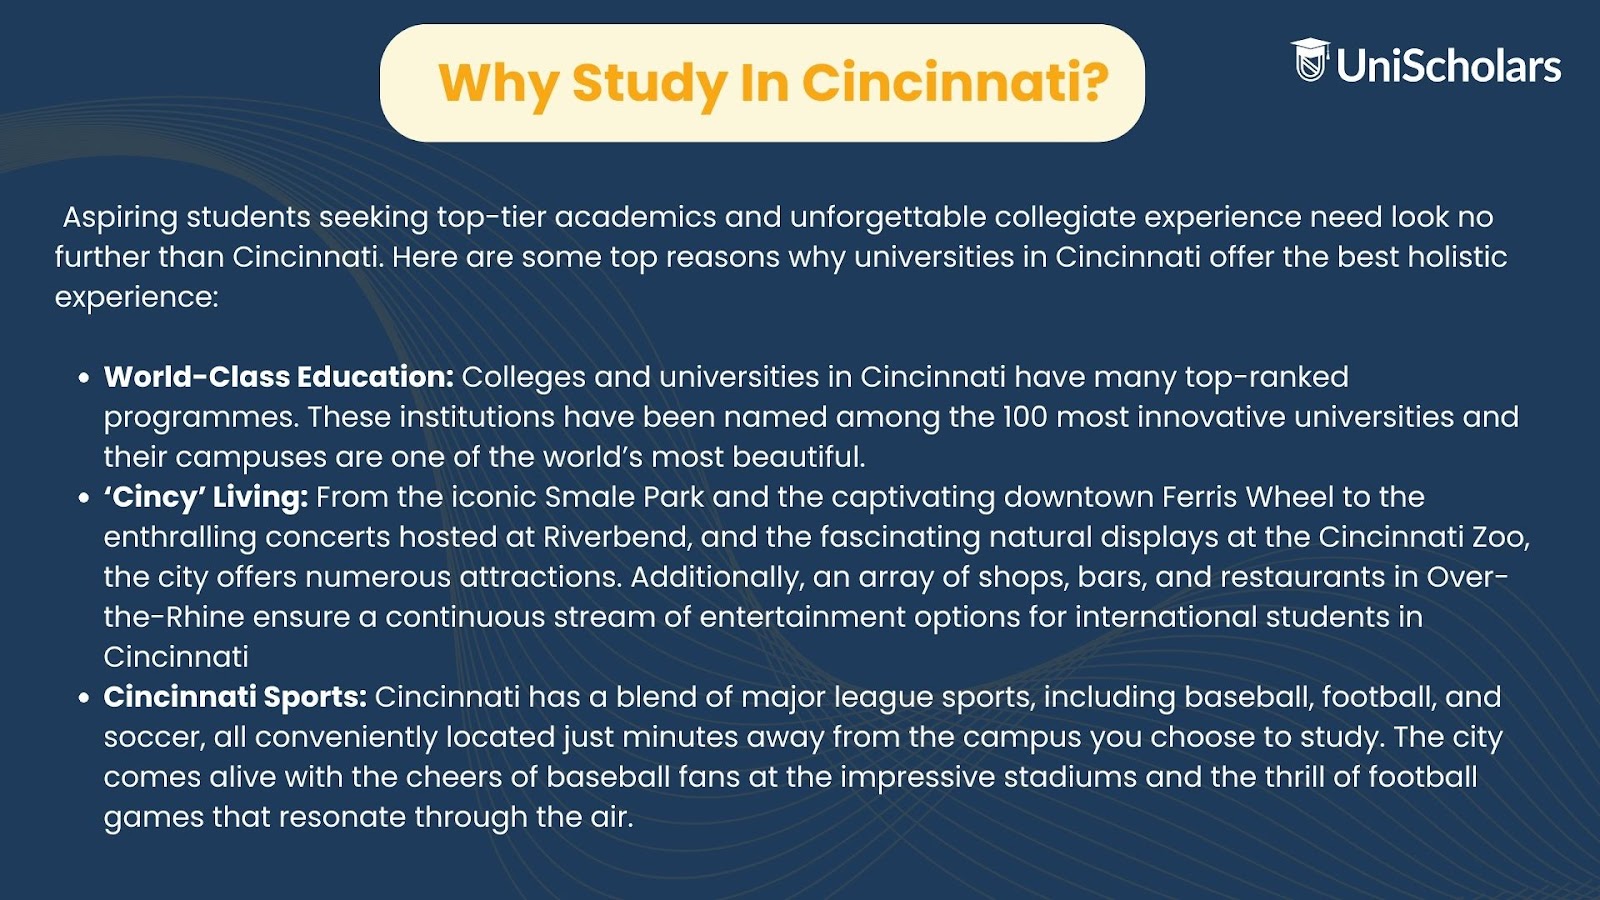 Top reasons why you should study in Cincinnati